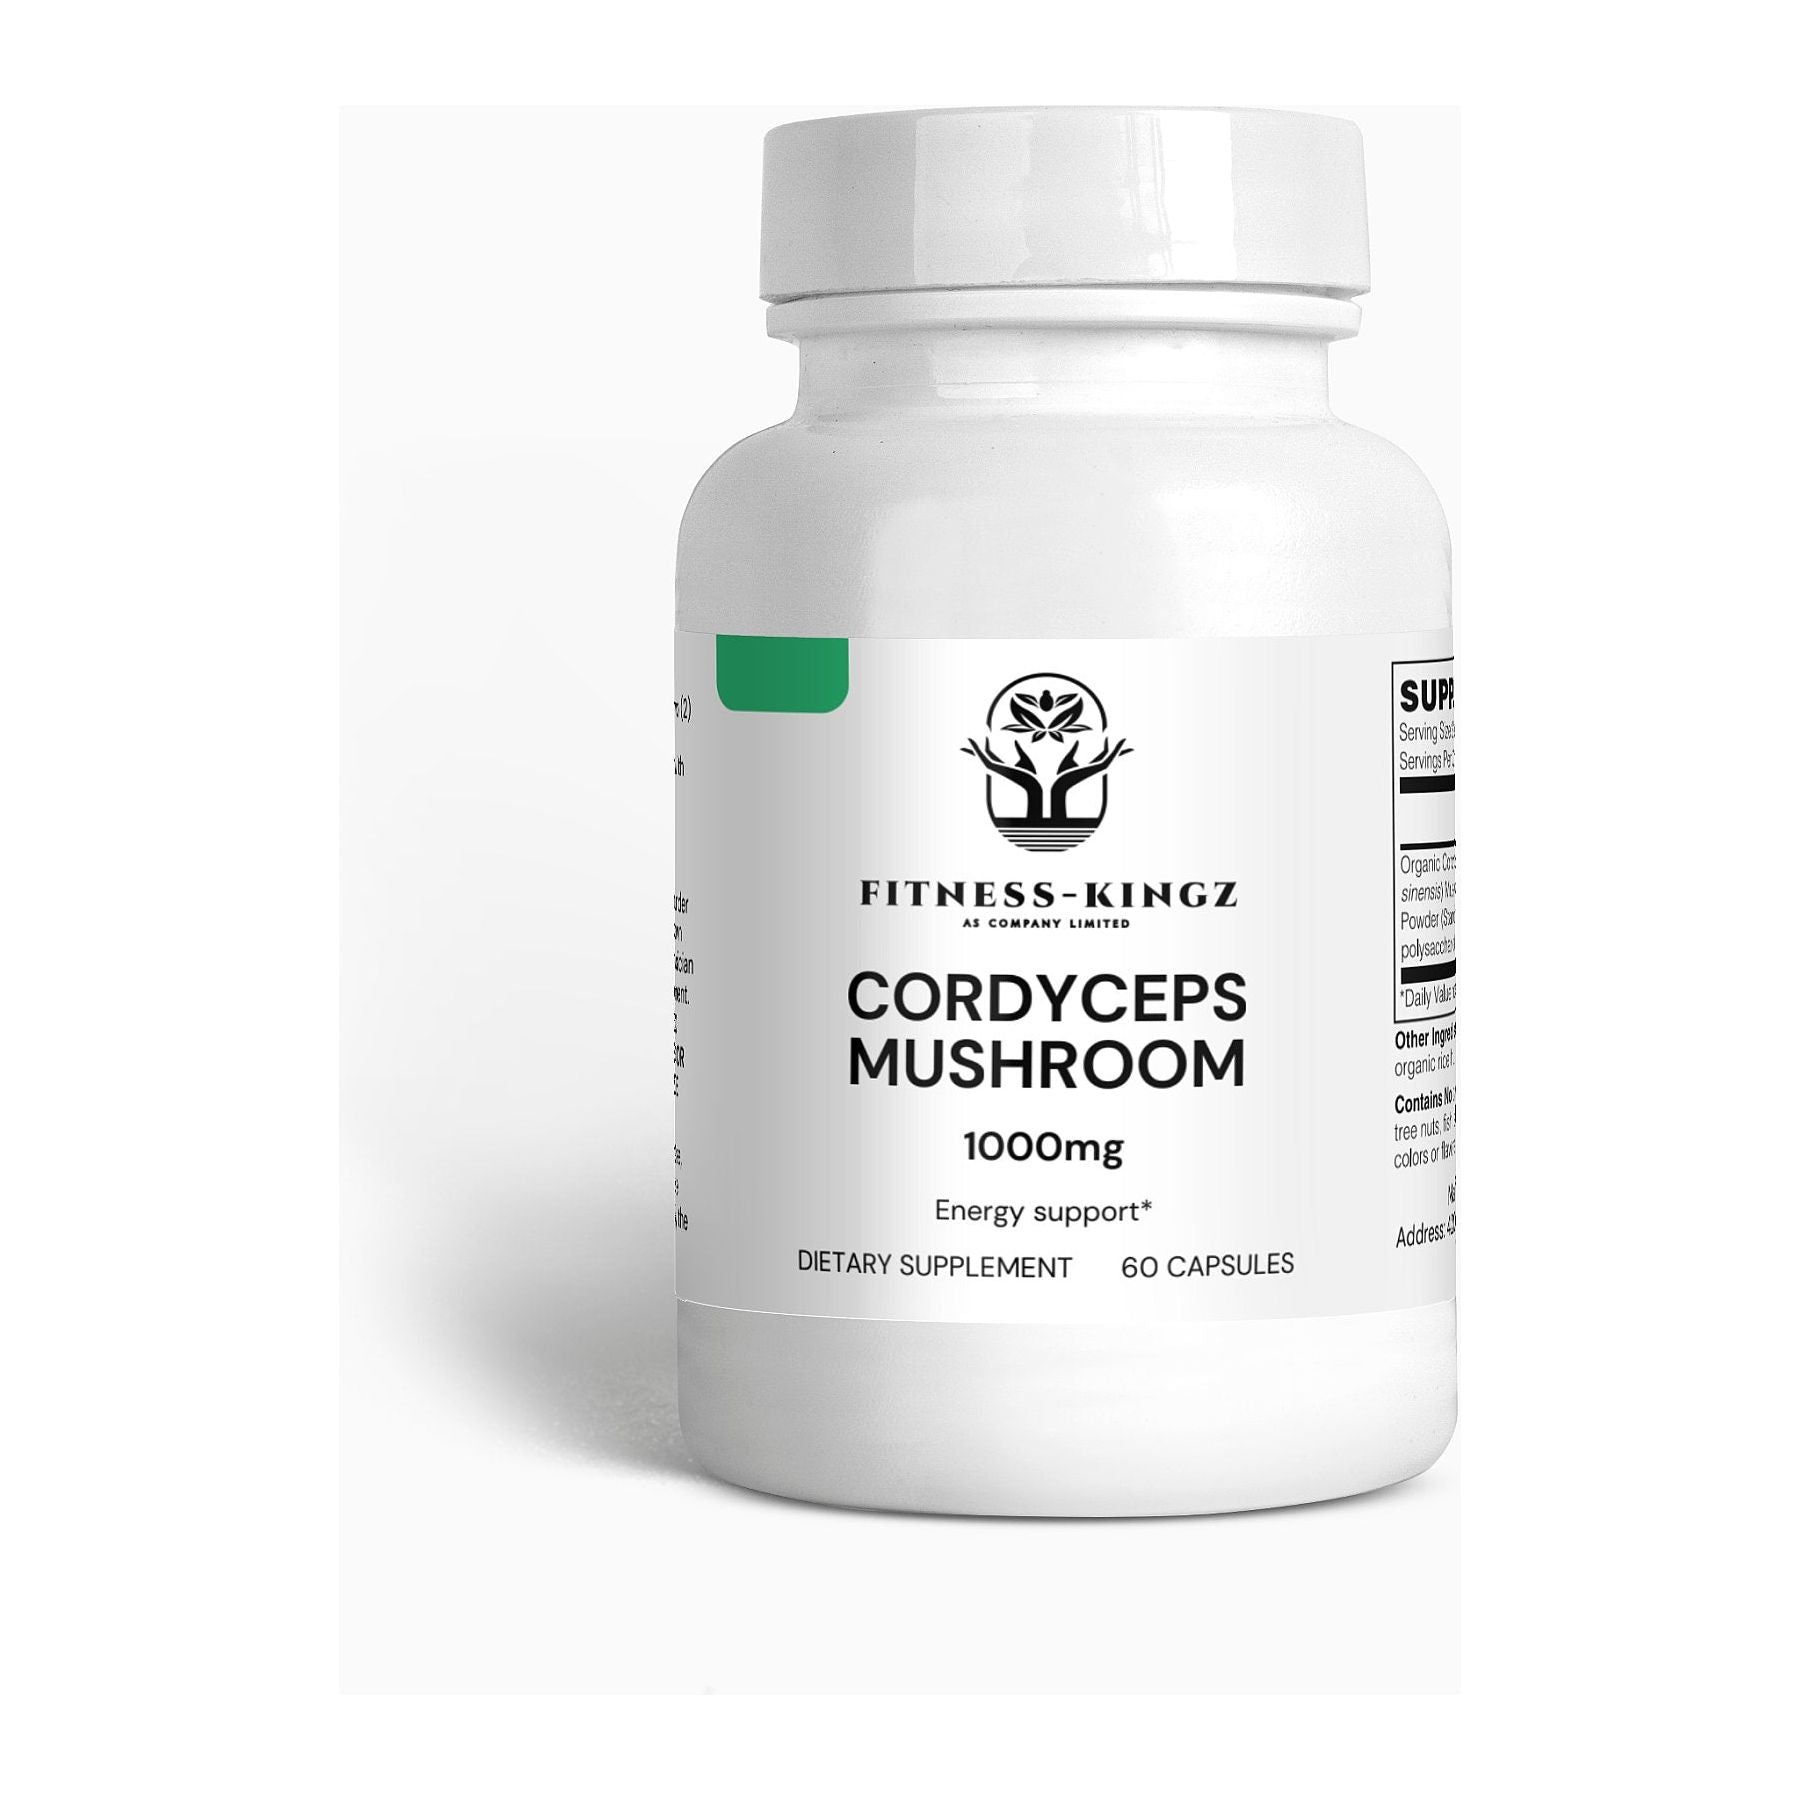 Fitness-Kingz Cordyceps Mushroom